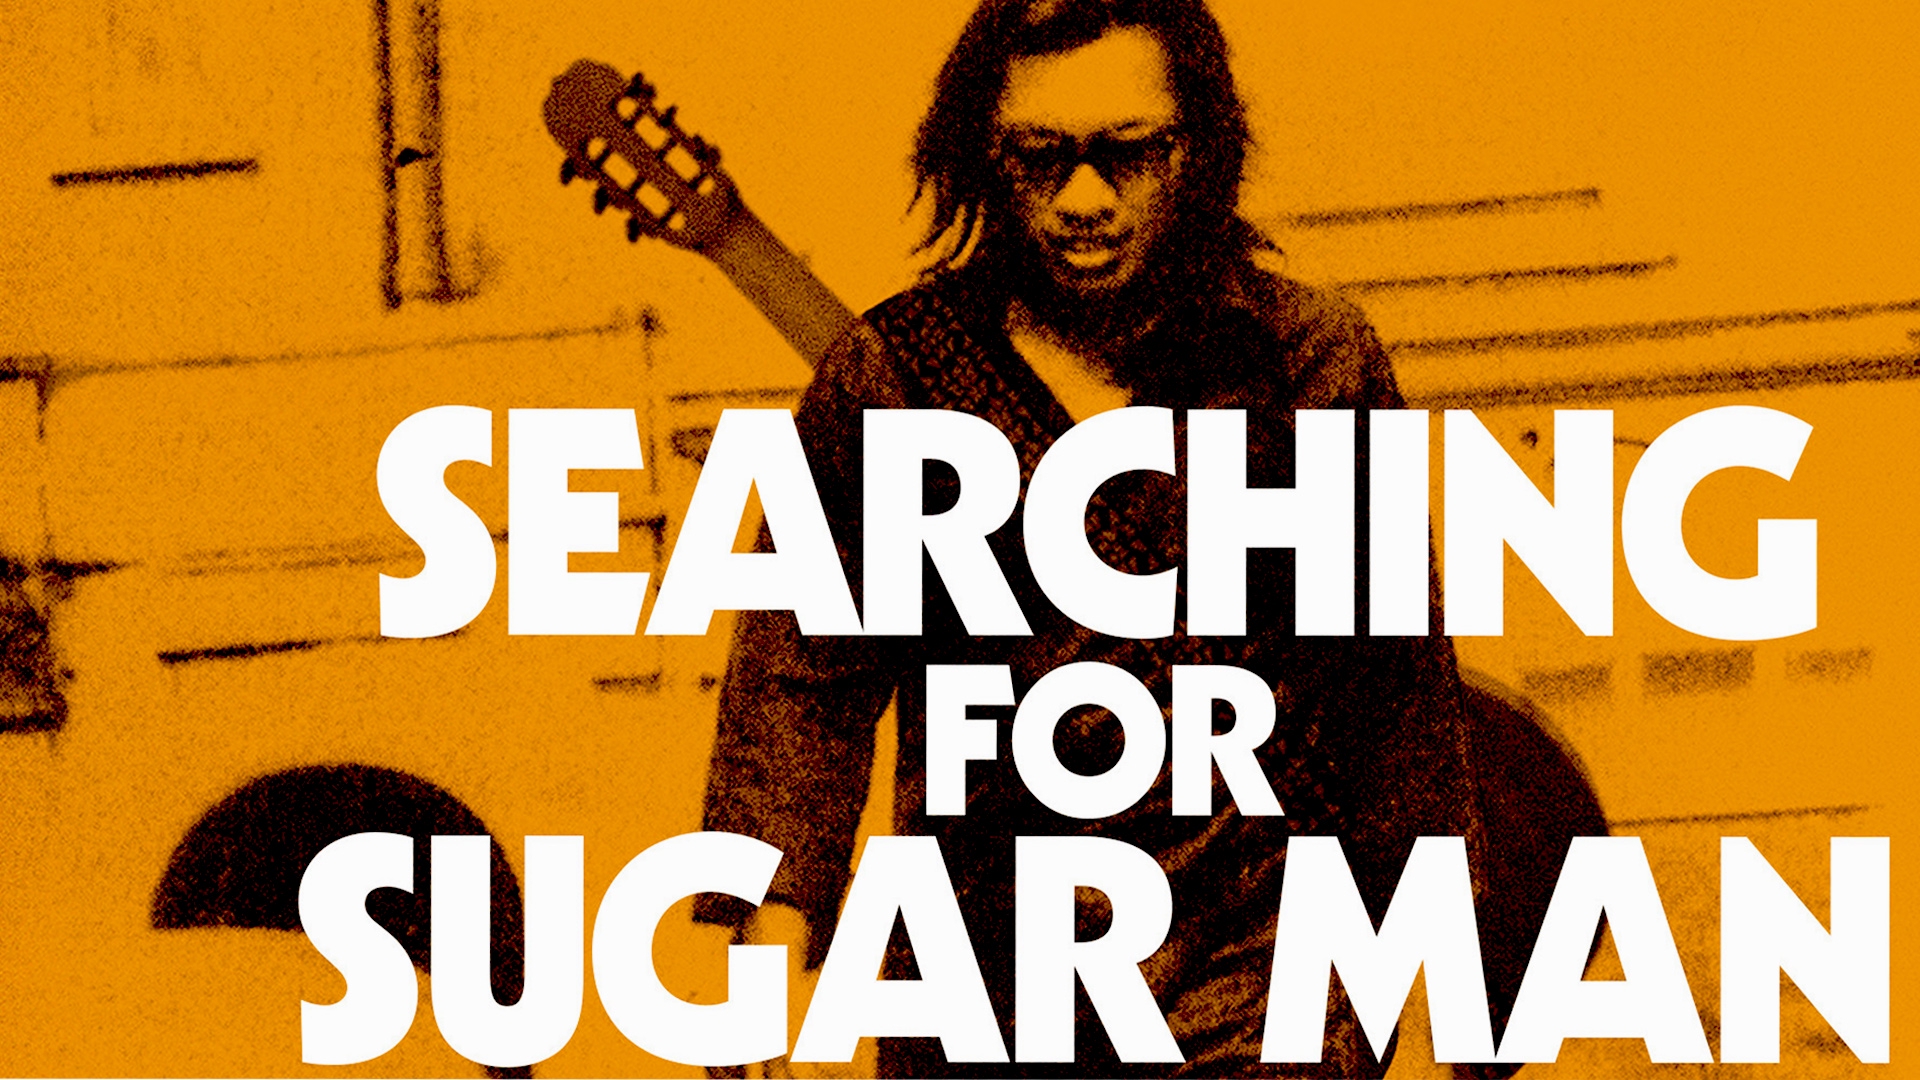 Like men перевод. Searching for Sugar man. Родригез Шугар Мэн. Dan Sugarman Guitar.